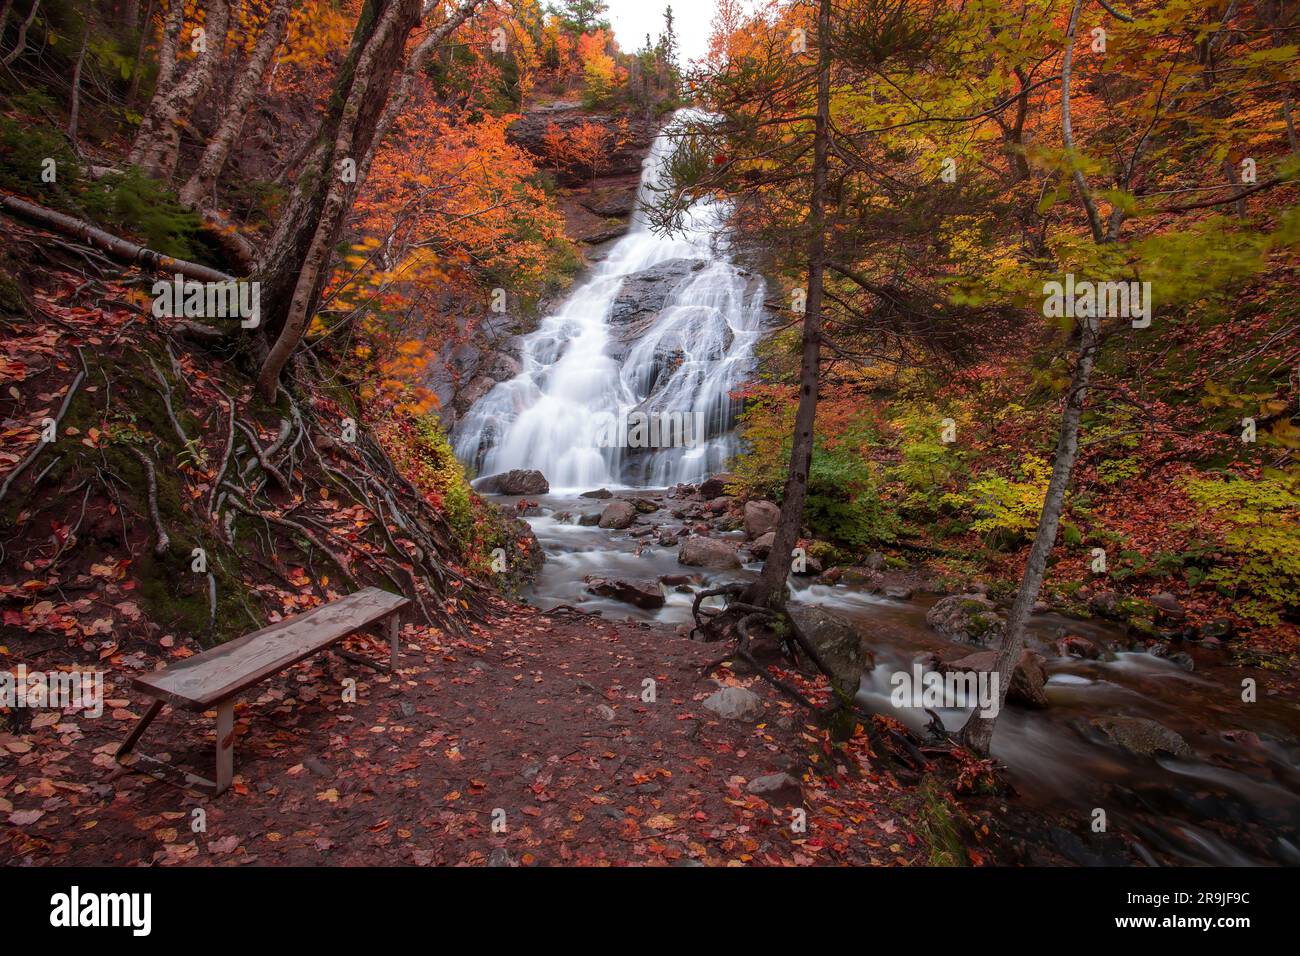 Beulach Ban Falls, Cape Breton -High water fall in an autumn forest landscape with dense trees, Cape Breton. Autumn waterfalls. Nova Scotia, Canada Stock Photo